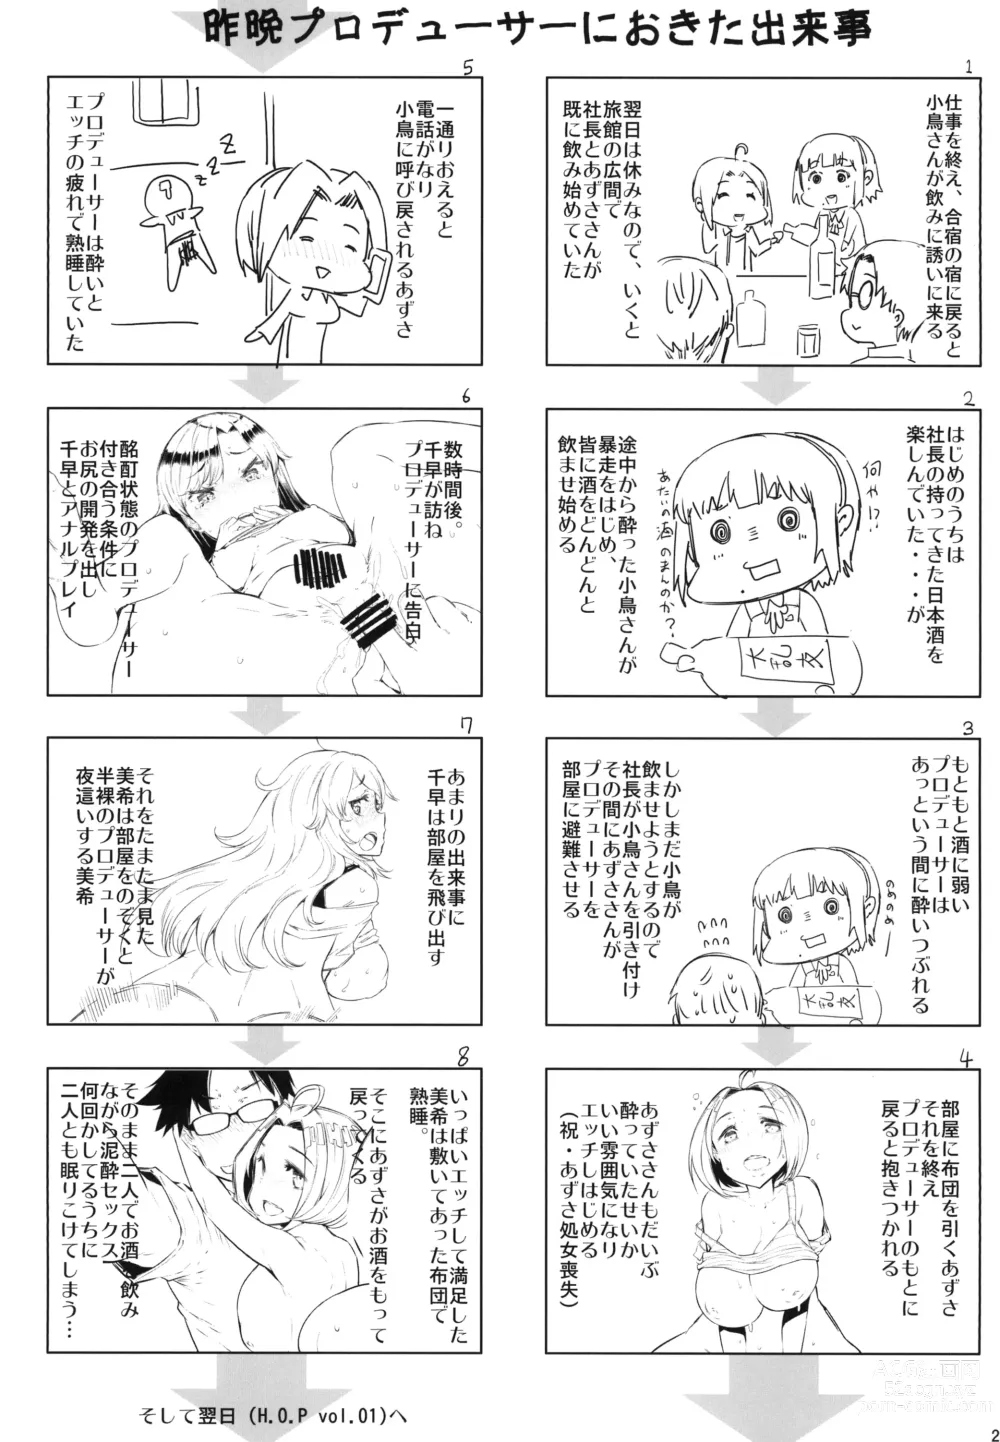 Page 22 of doujinshi HOP vol. 03 Final Episode